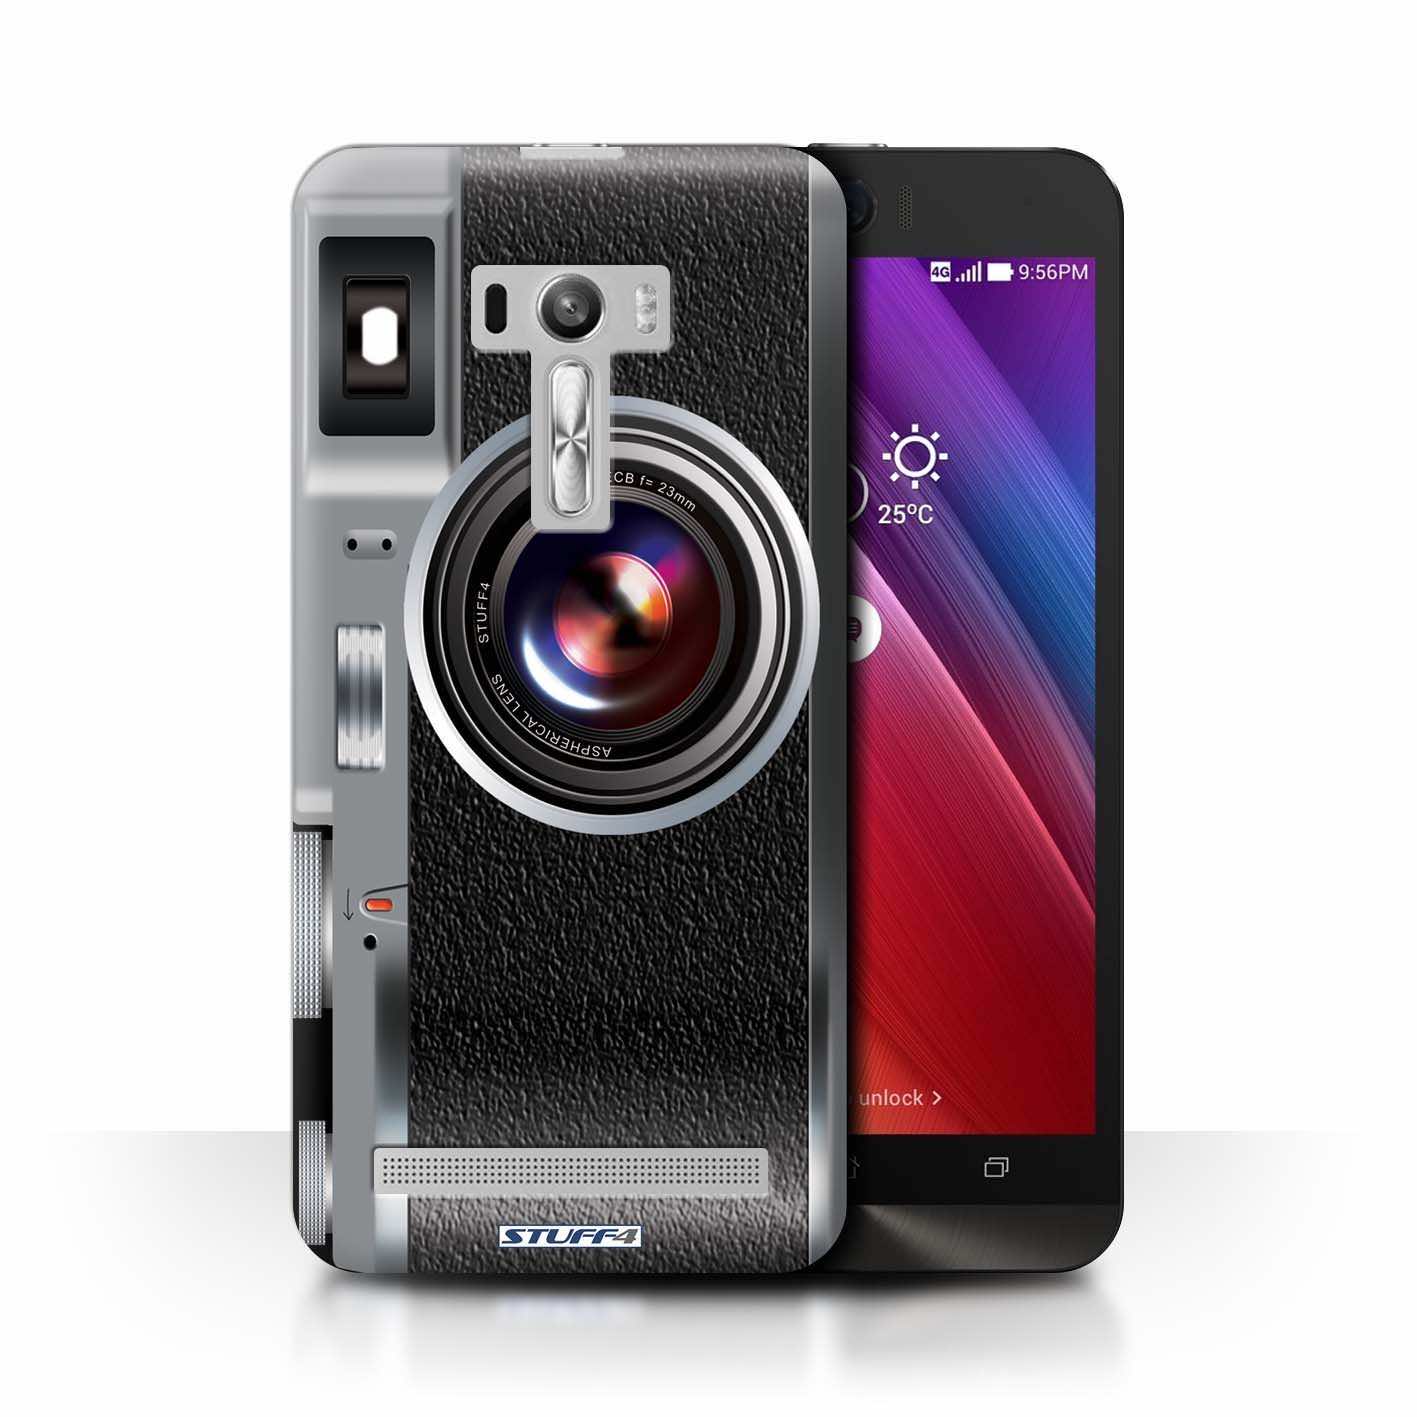 Custodia FLIP cover NERA p Asus Zenfone Selfie ZD551KL case stand+tasche BOOKLET